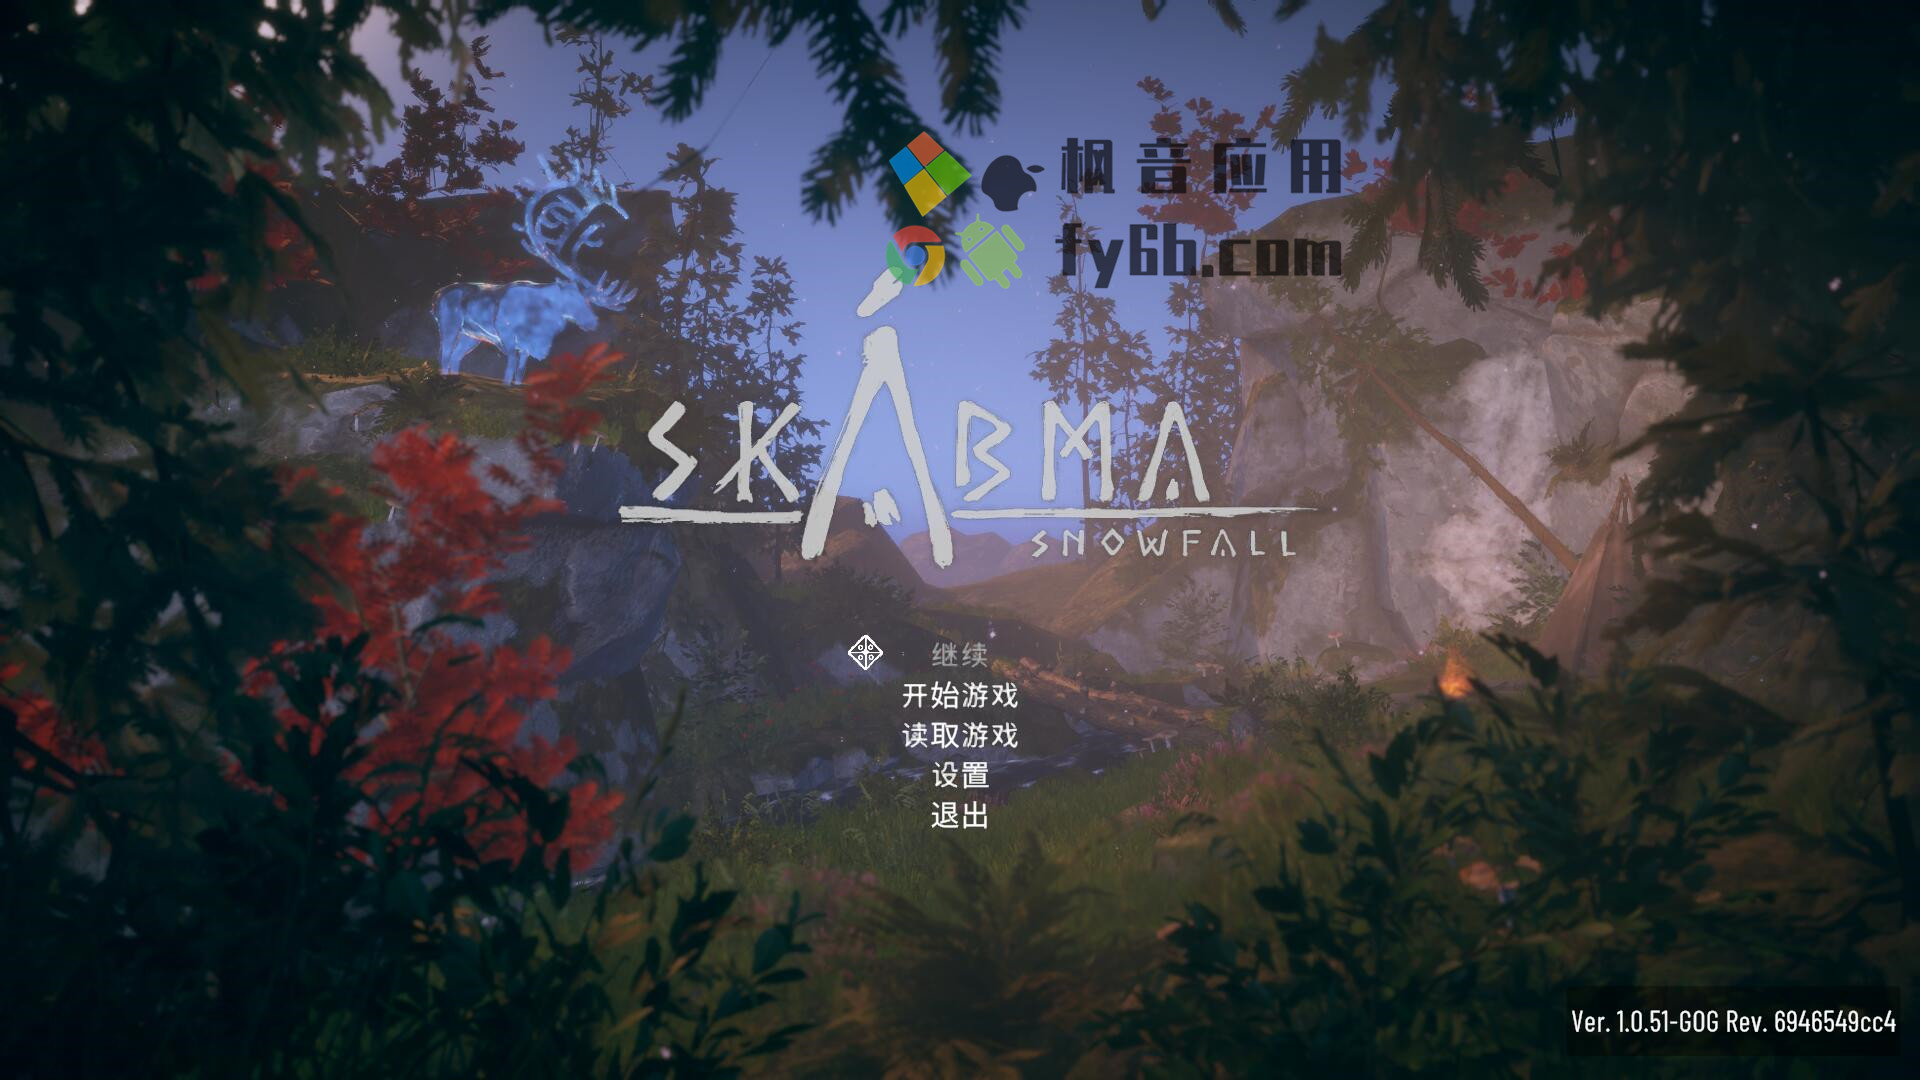 Windows 永夜:雪落Skábma™ - Snowfall 中文版